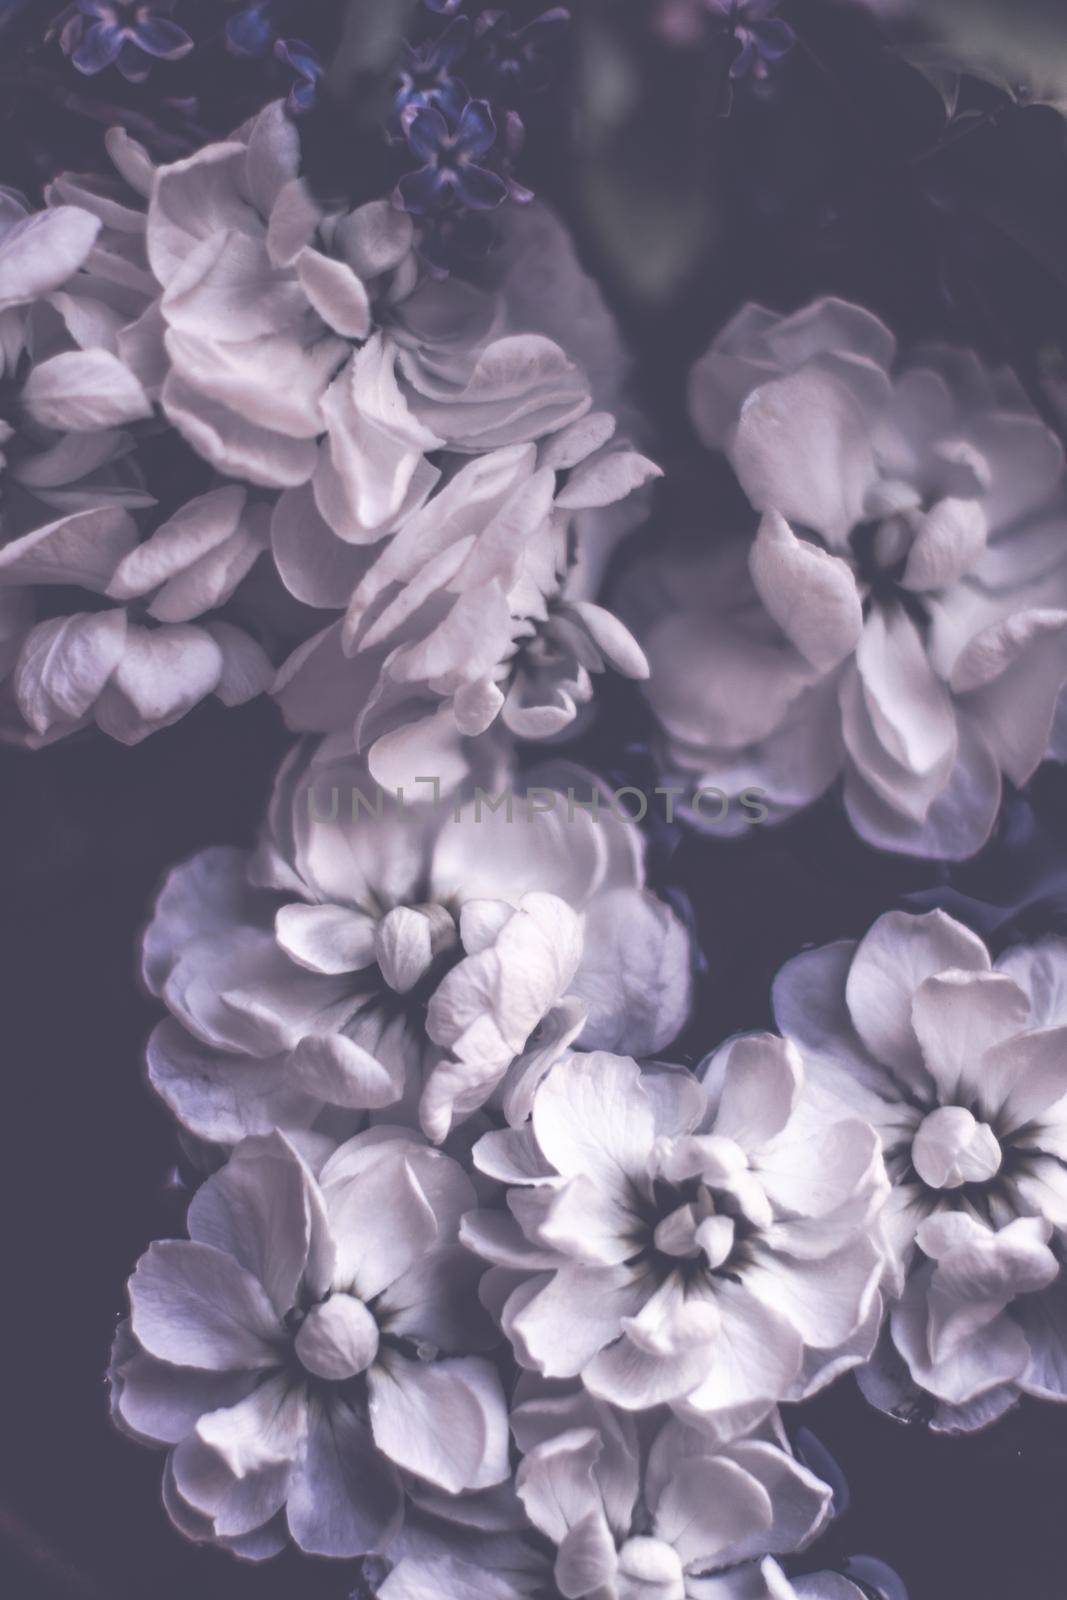 Vintage floral background by Anneleven